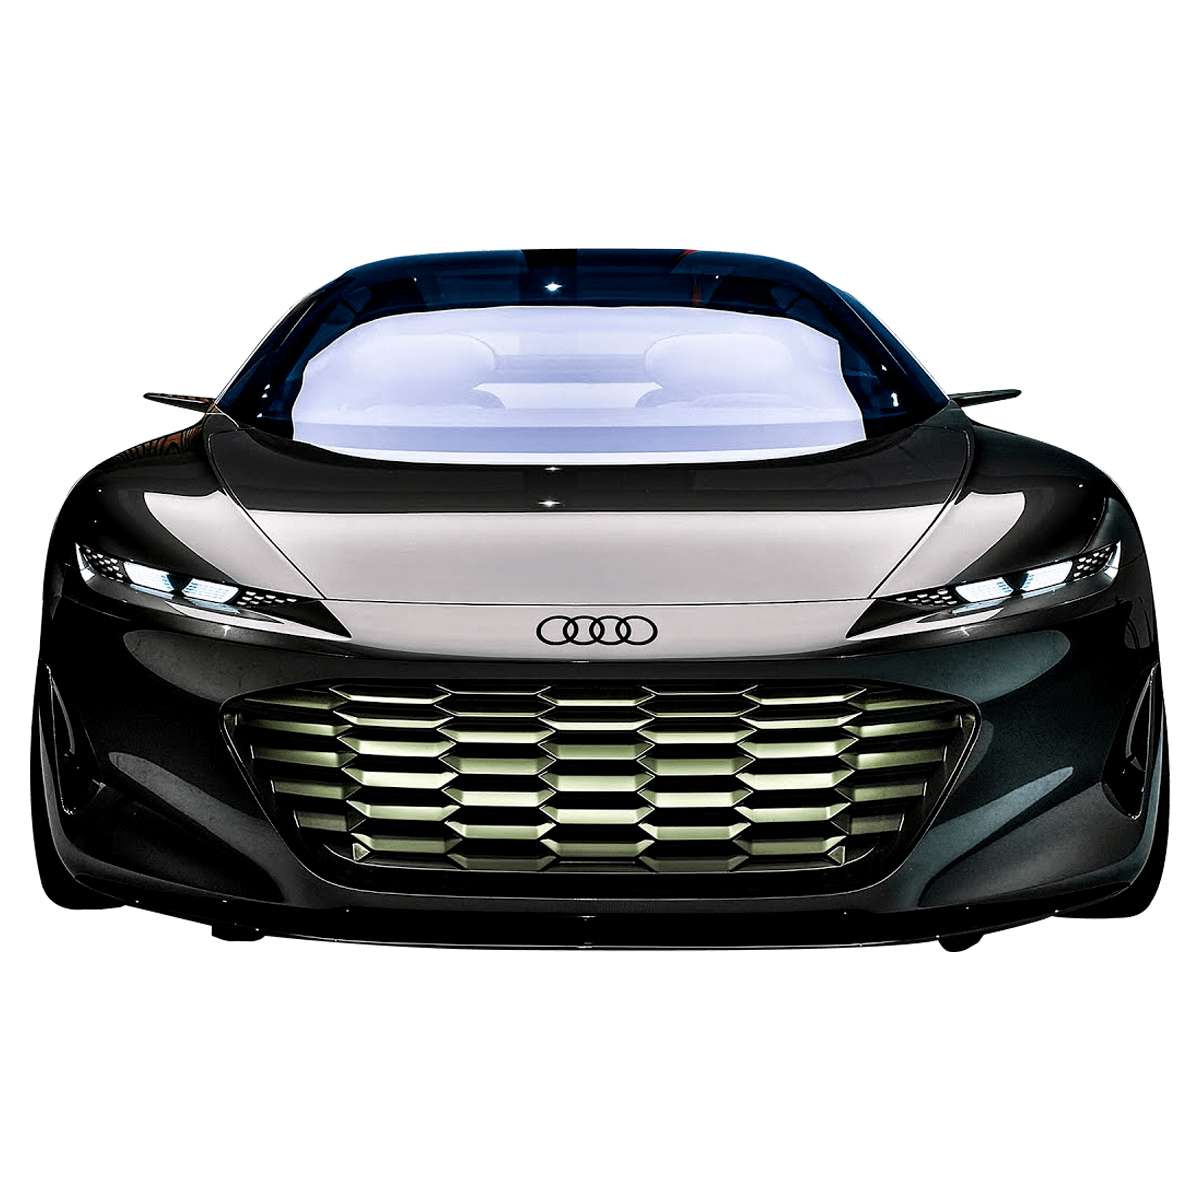 Audi grandsphere Pre New Audi A8 png. bmw car png, audi car background, bmw car background png, bugatti car png, audi logo, audi r8 png, bmw car background png, audi car png hd, audi car png images, audi car logo png, plus png audi car, audio car png, car audio system png, audio car logo png, pride car audio png, audi a8 l price in bd, audi a8 l price in bangladesh, audi a8 car price in bangladesh, audi a8 electric price, audi a8 price, audi grandsphere price, new electric audi a8, new audi a8 2022, audi grand sphere price usa, audi a8 electric price, audi a8 price, audi grandsphere price, new electric audi a8, new audi a8 2022, audi grand sphere price usa, audi grand sphere interior, new audi grand sphere,